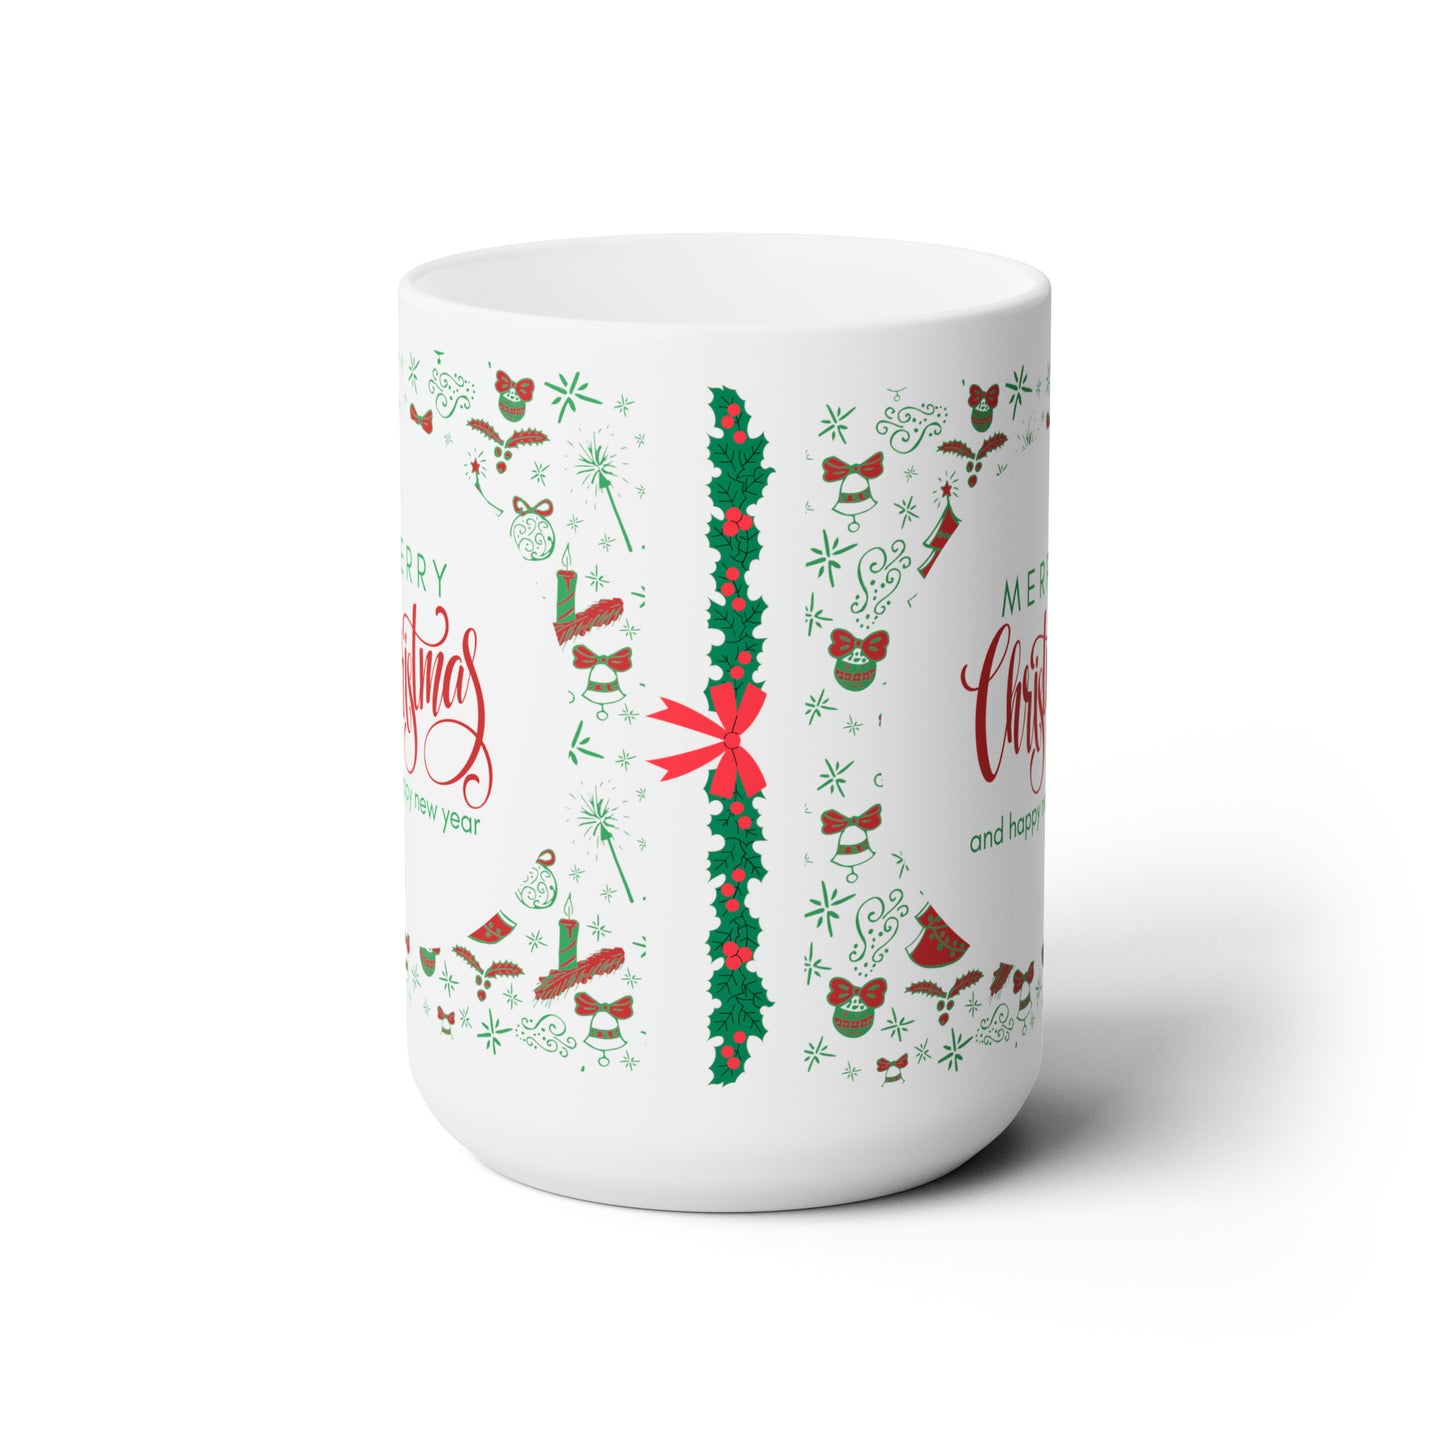 Merry Christmas and Happy New year Ceramic Mugs, 15oz